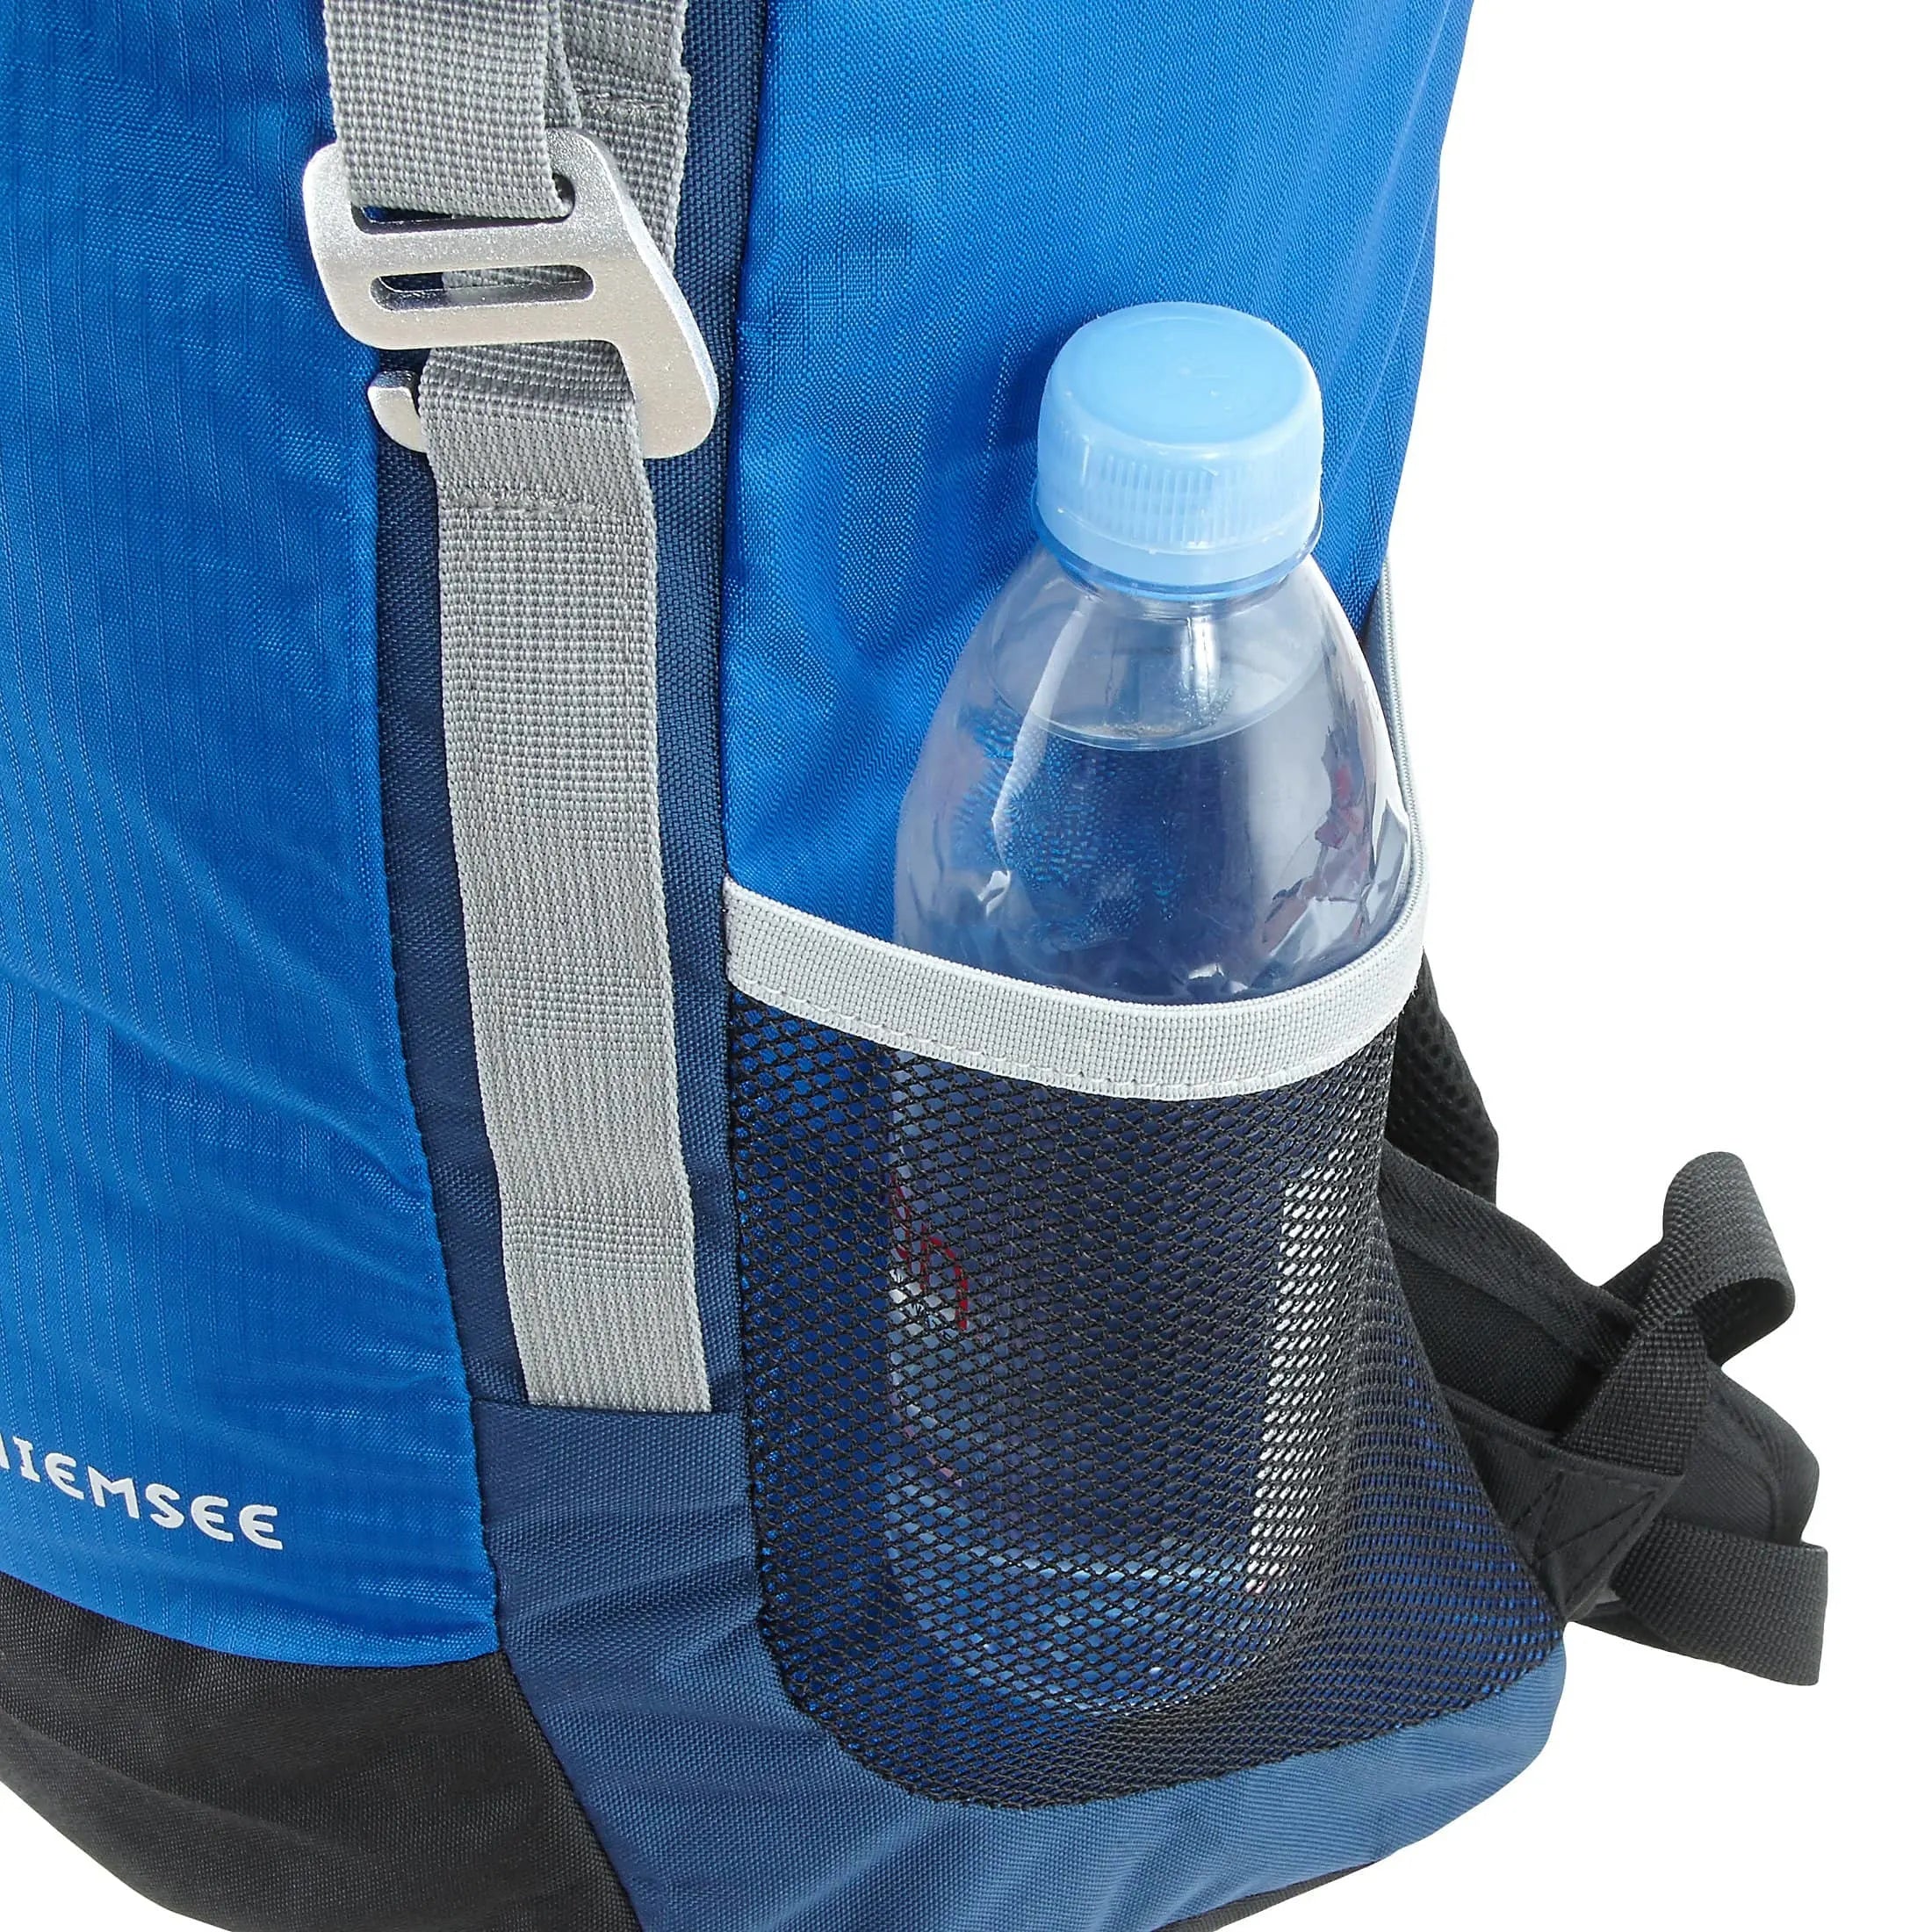 Chiemsee Sports & Travel Bags Trekking Rucksack 52 cm - ebony